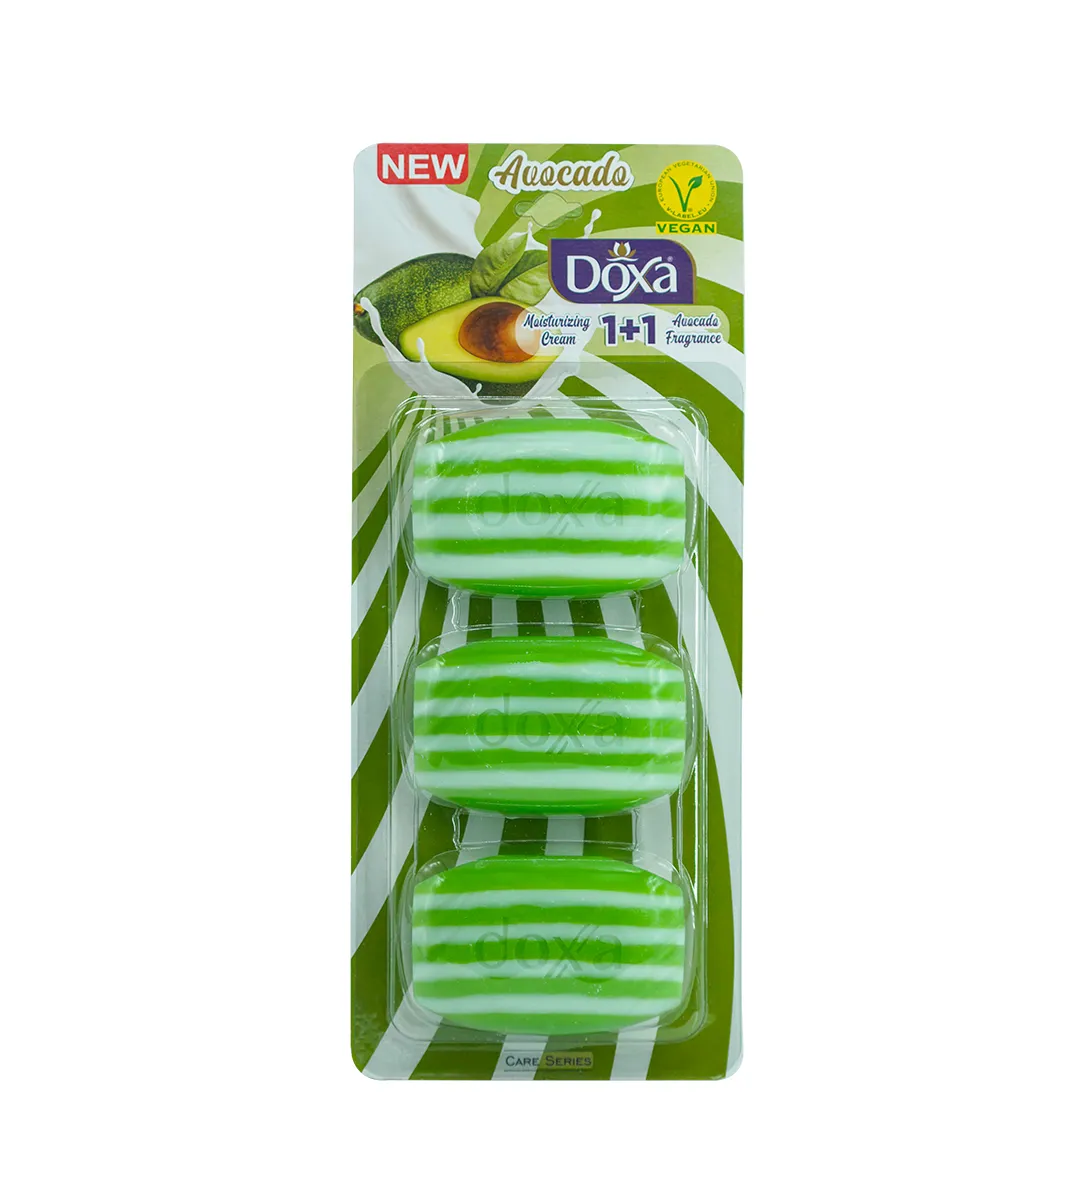 Doxa 90 Gr X 3 ( 1+1) Blister Beauty Soap With Moisturizing Cream Care Series Avocado